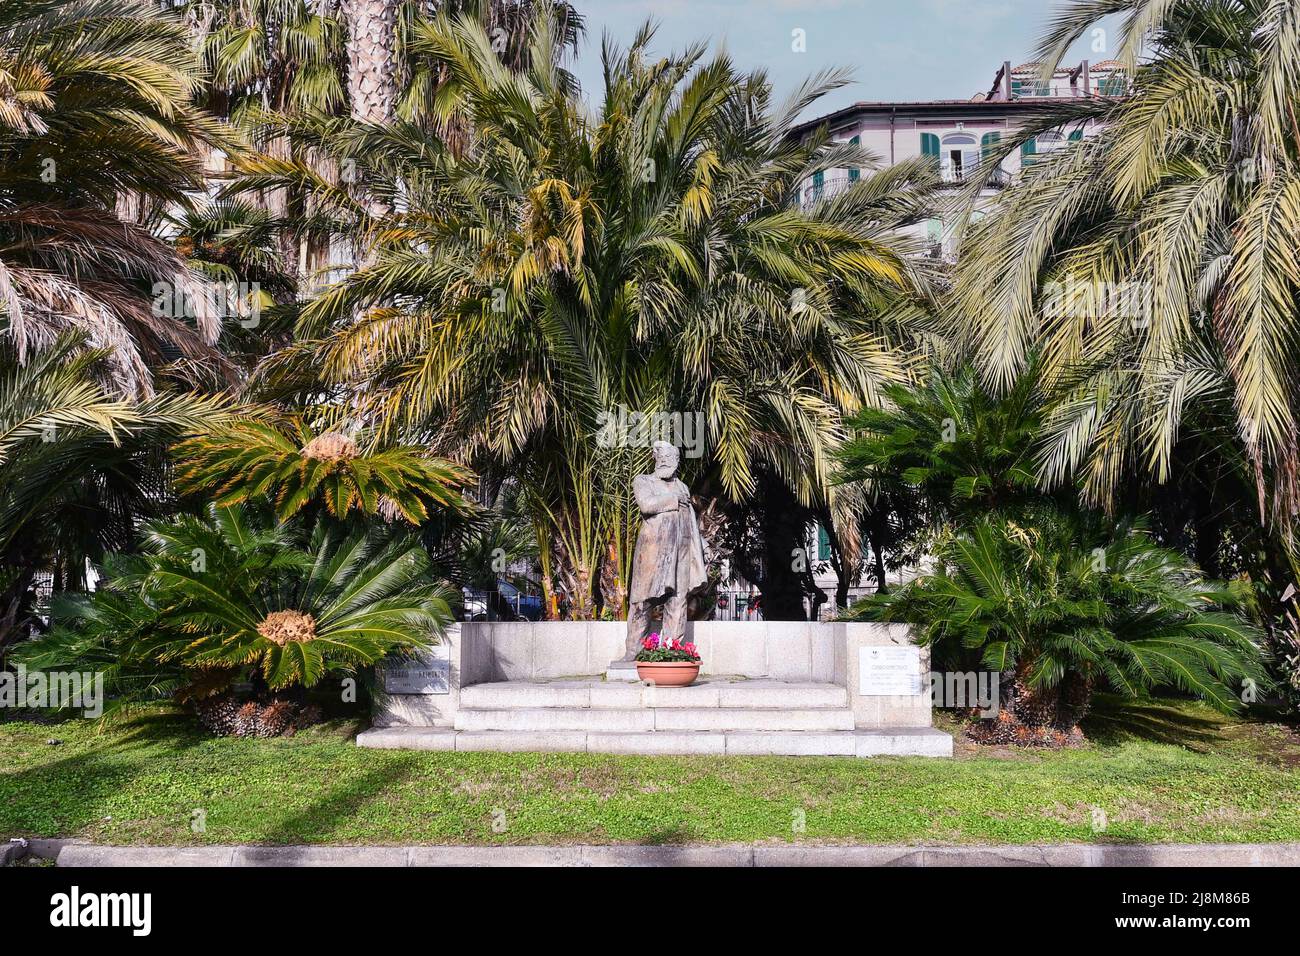 Monument to Orazio Raimondo (1875-1920), lawyer and politician, on the promenade of the coastal city, between palm trees in a sunny day, Sanremo Stock Photo